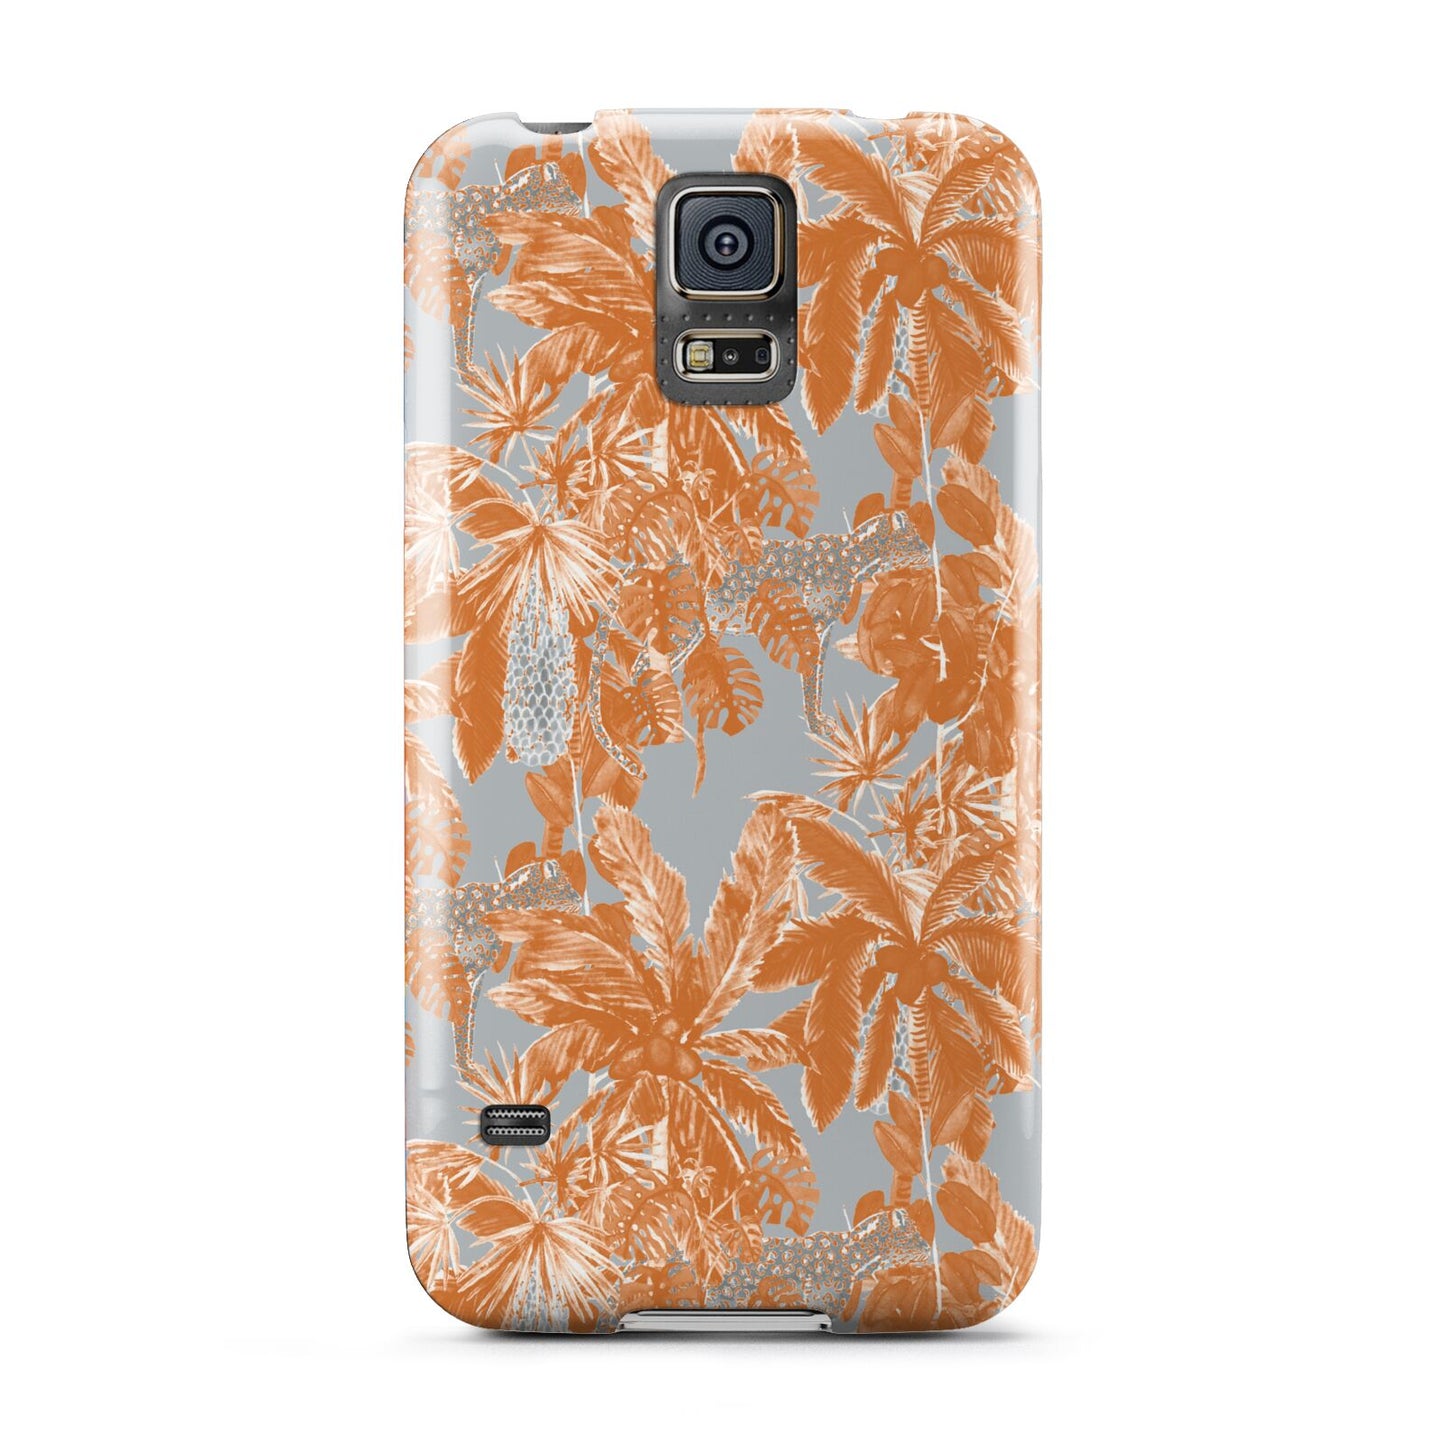 Tropical Samsung Galaxy S5 Case